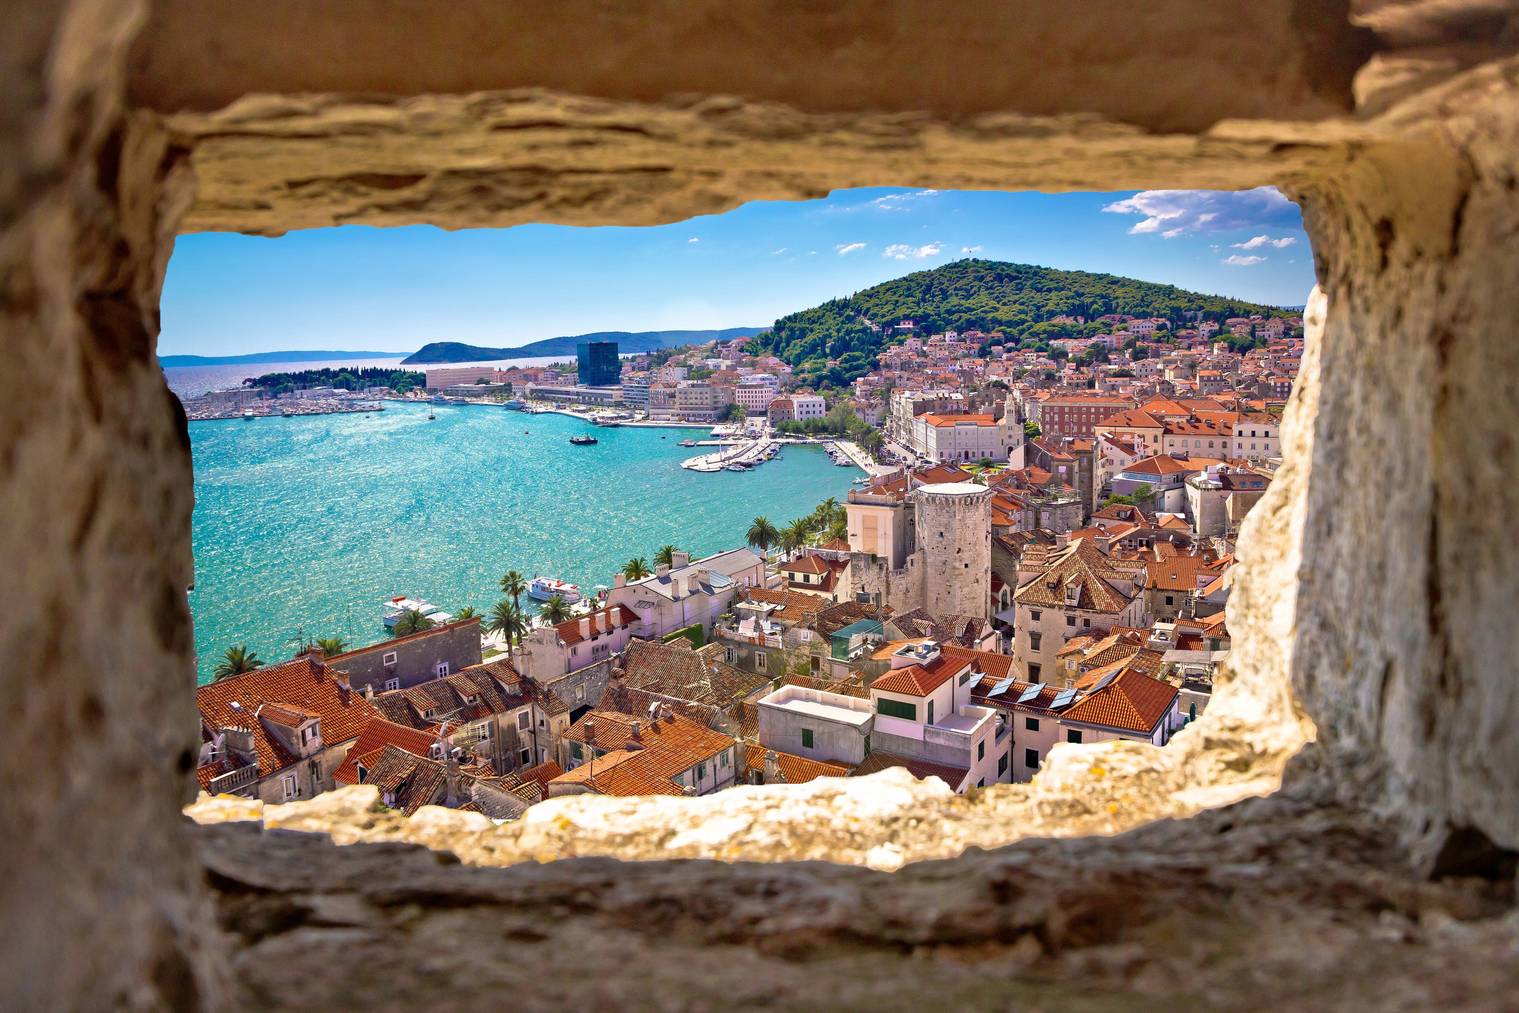 Die Stadt Split liegt direkt am Meer. (Bild: istock)